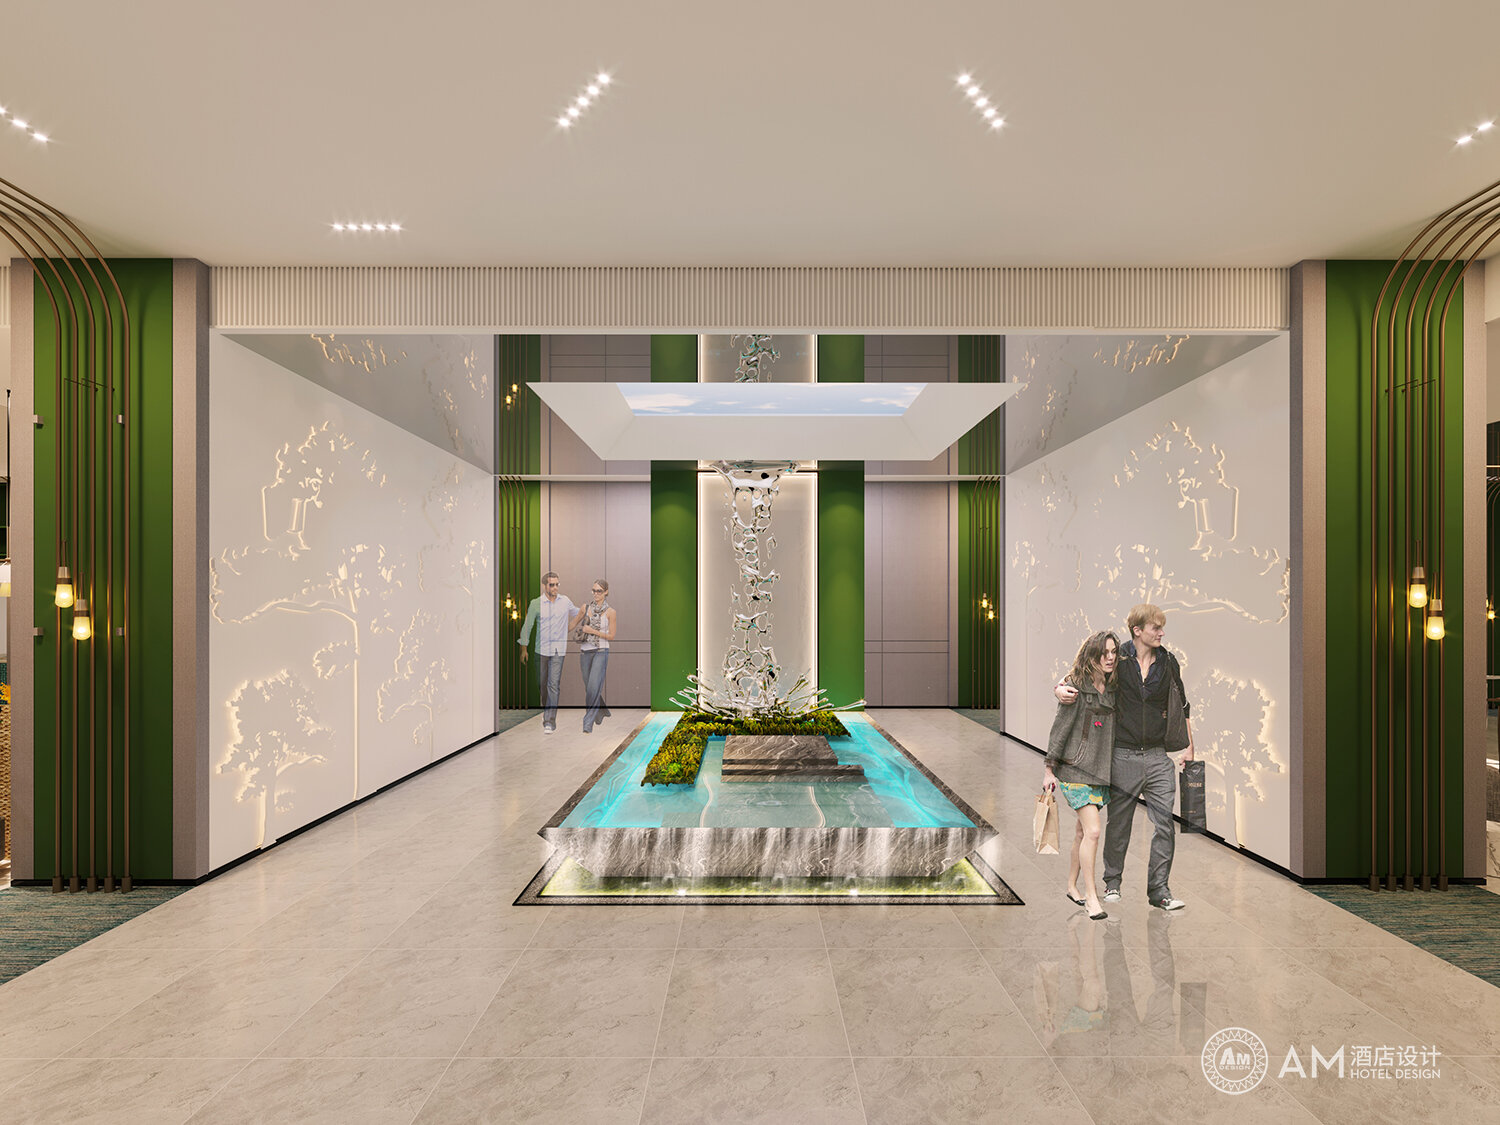 AM DESIGN | Atrium design of Weinan Hotel